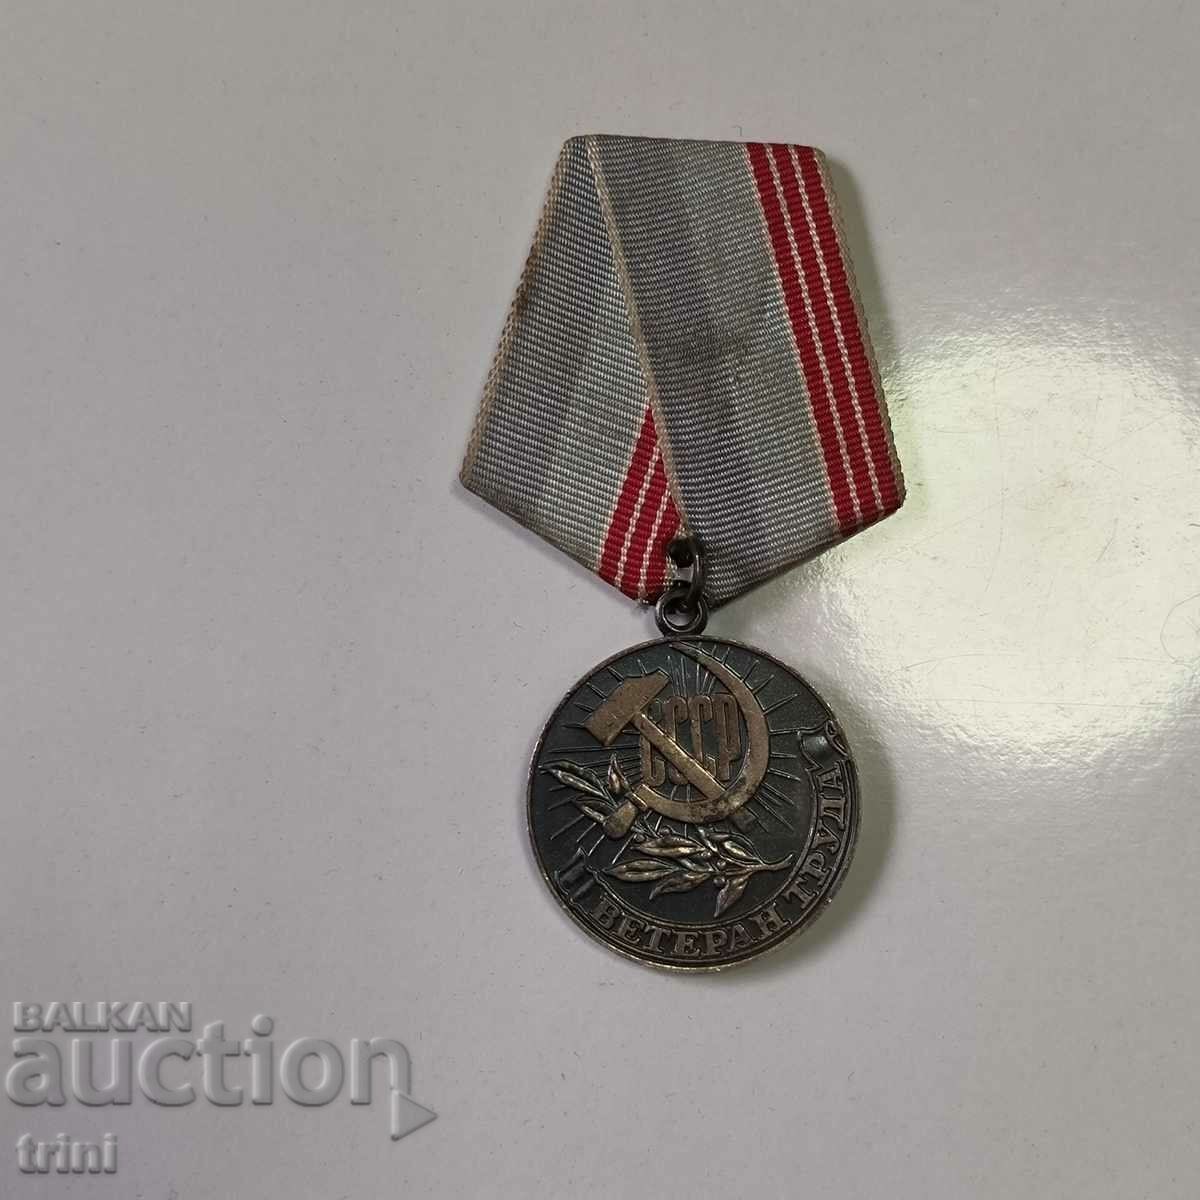 Medal "Veteran of Labor" (1974) - large bearer